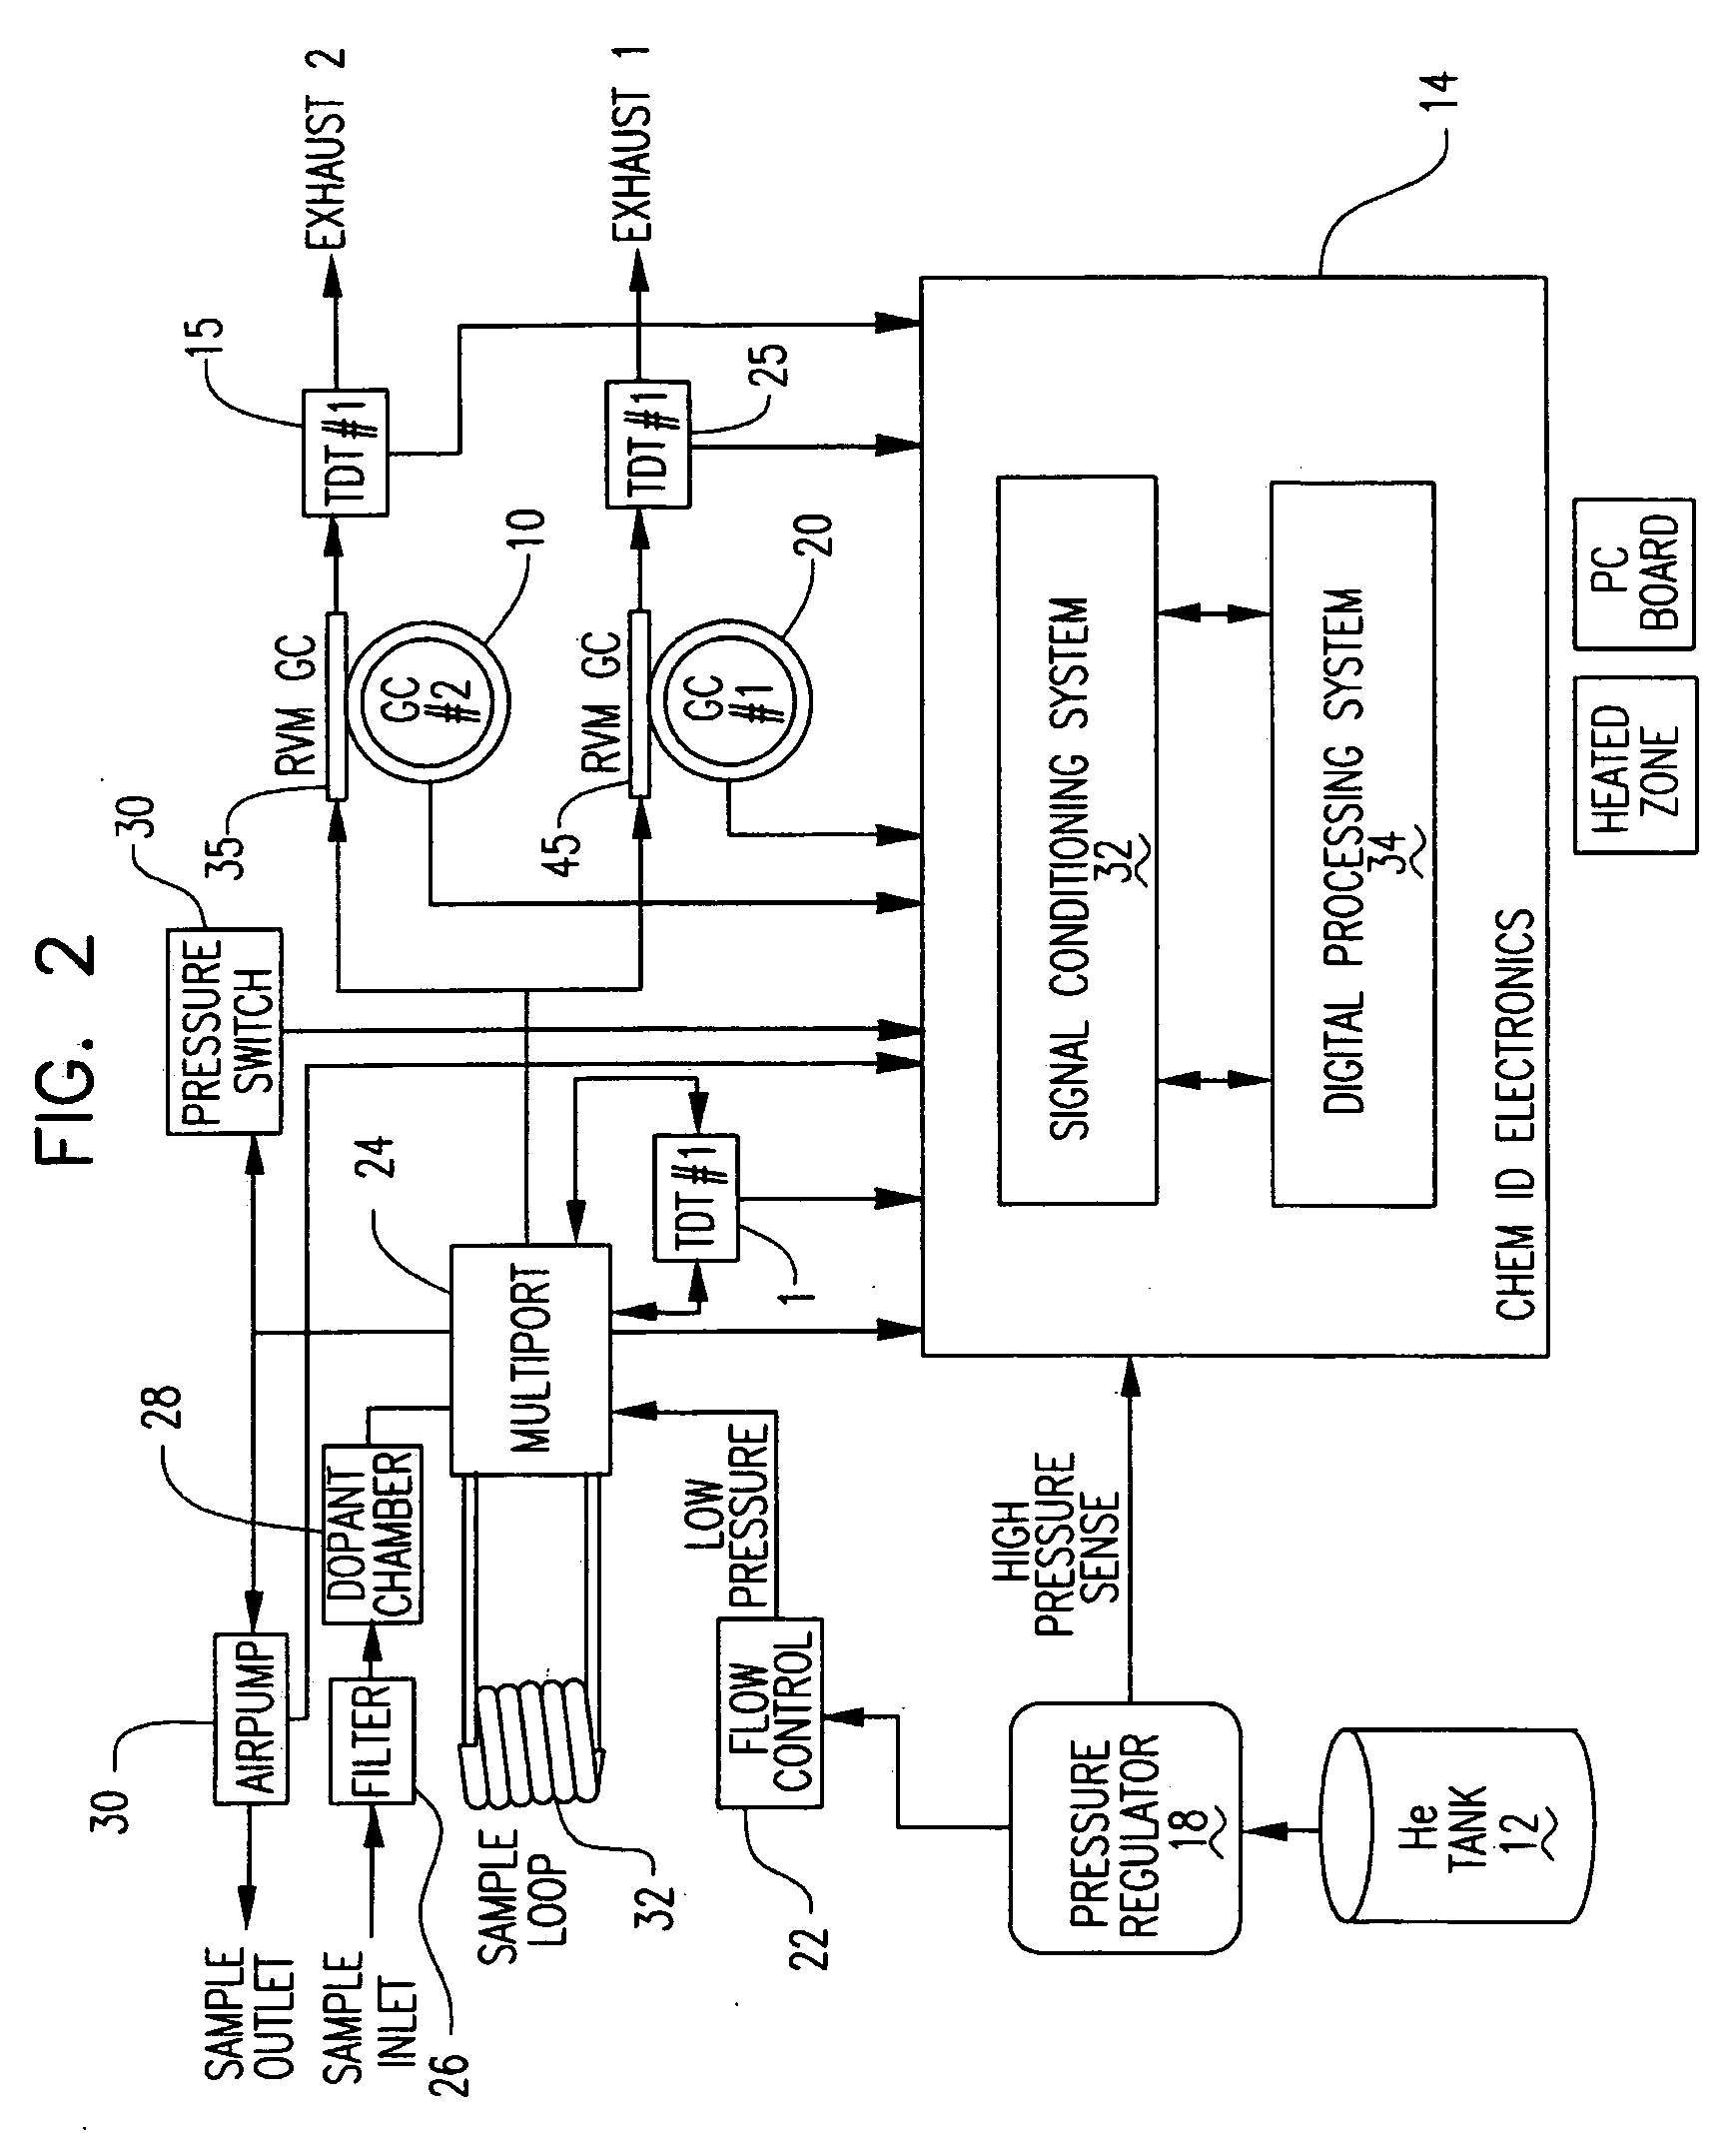 Multi-dimensional portable gas chromatograph system